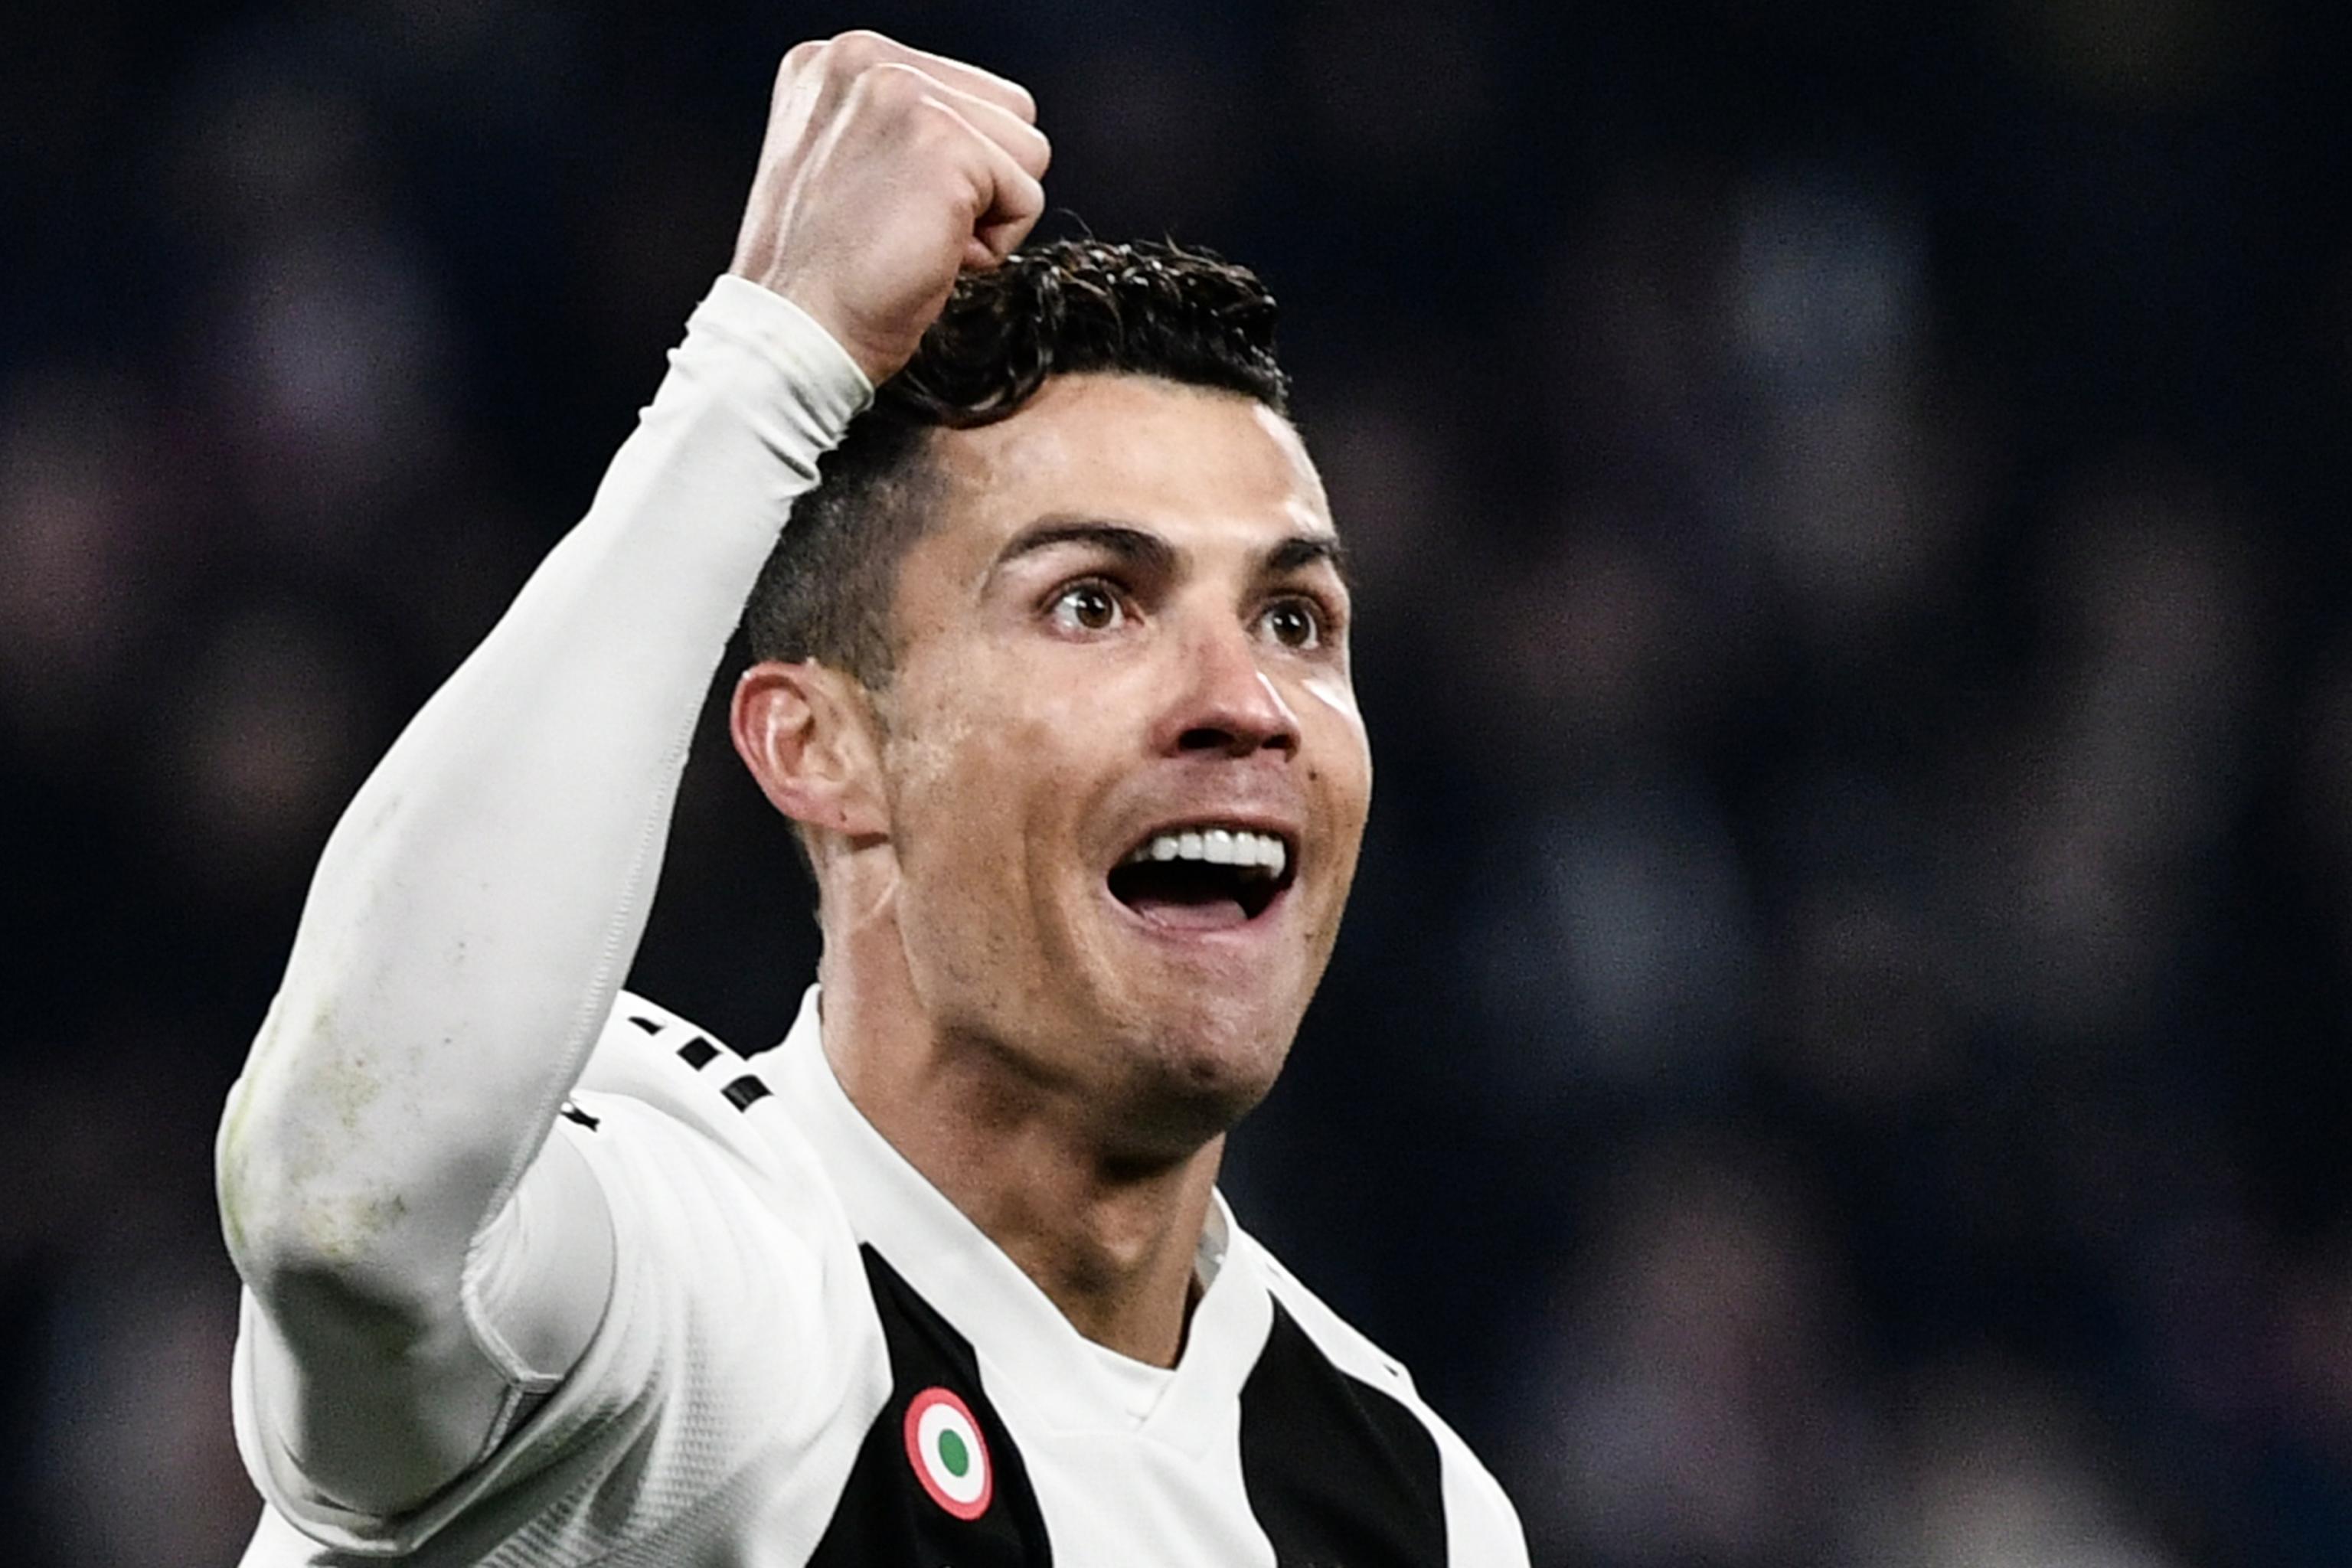 Juventus 3-0 Atletico Madrid (Agg: 3-2): Cristiano Ronaldo hat-trick sends  Juve to quarters, Football News